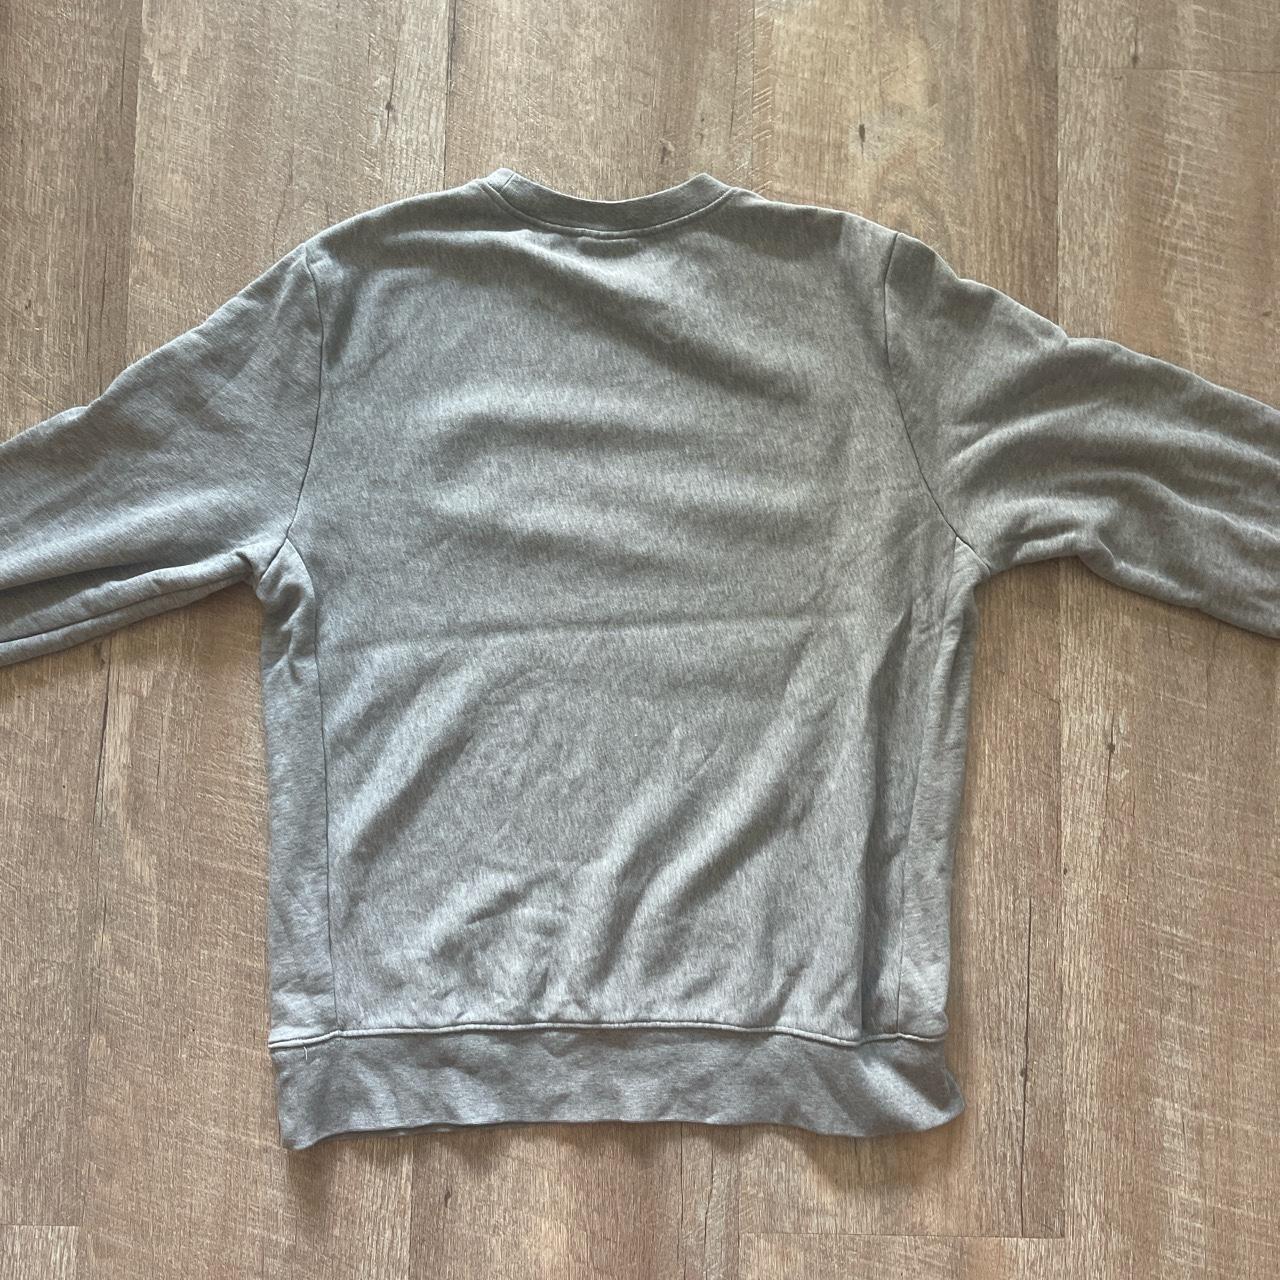 Paul Smith DINO sweater 🦕 100% cotton Perfect... - Depop